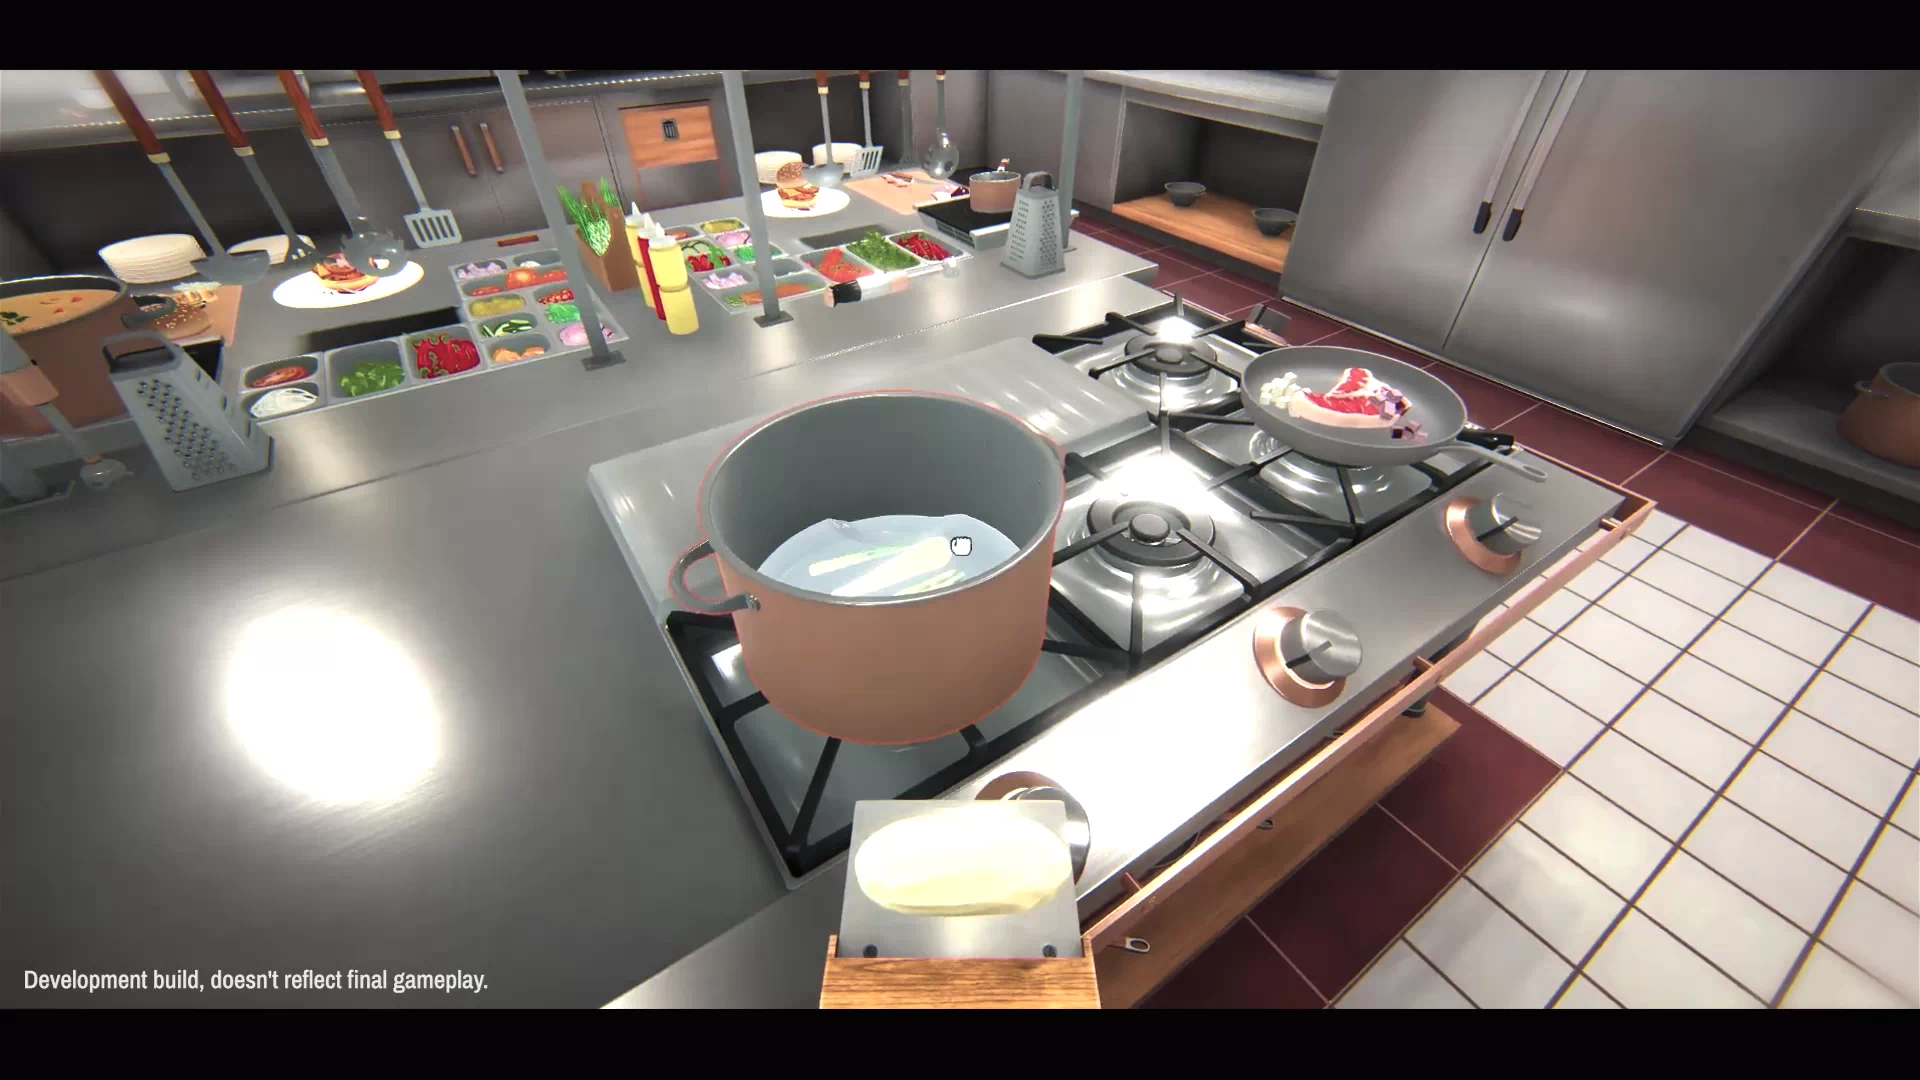 Cooking Simulator #2 - video Dailymotion